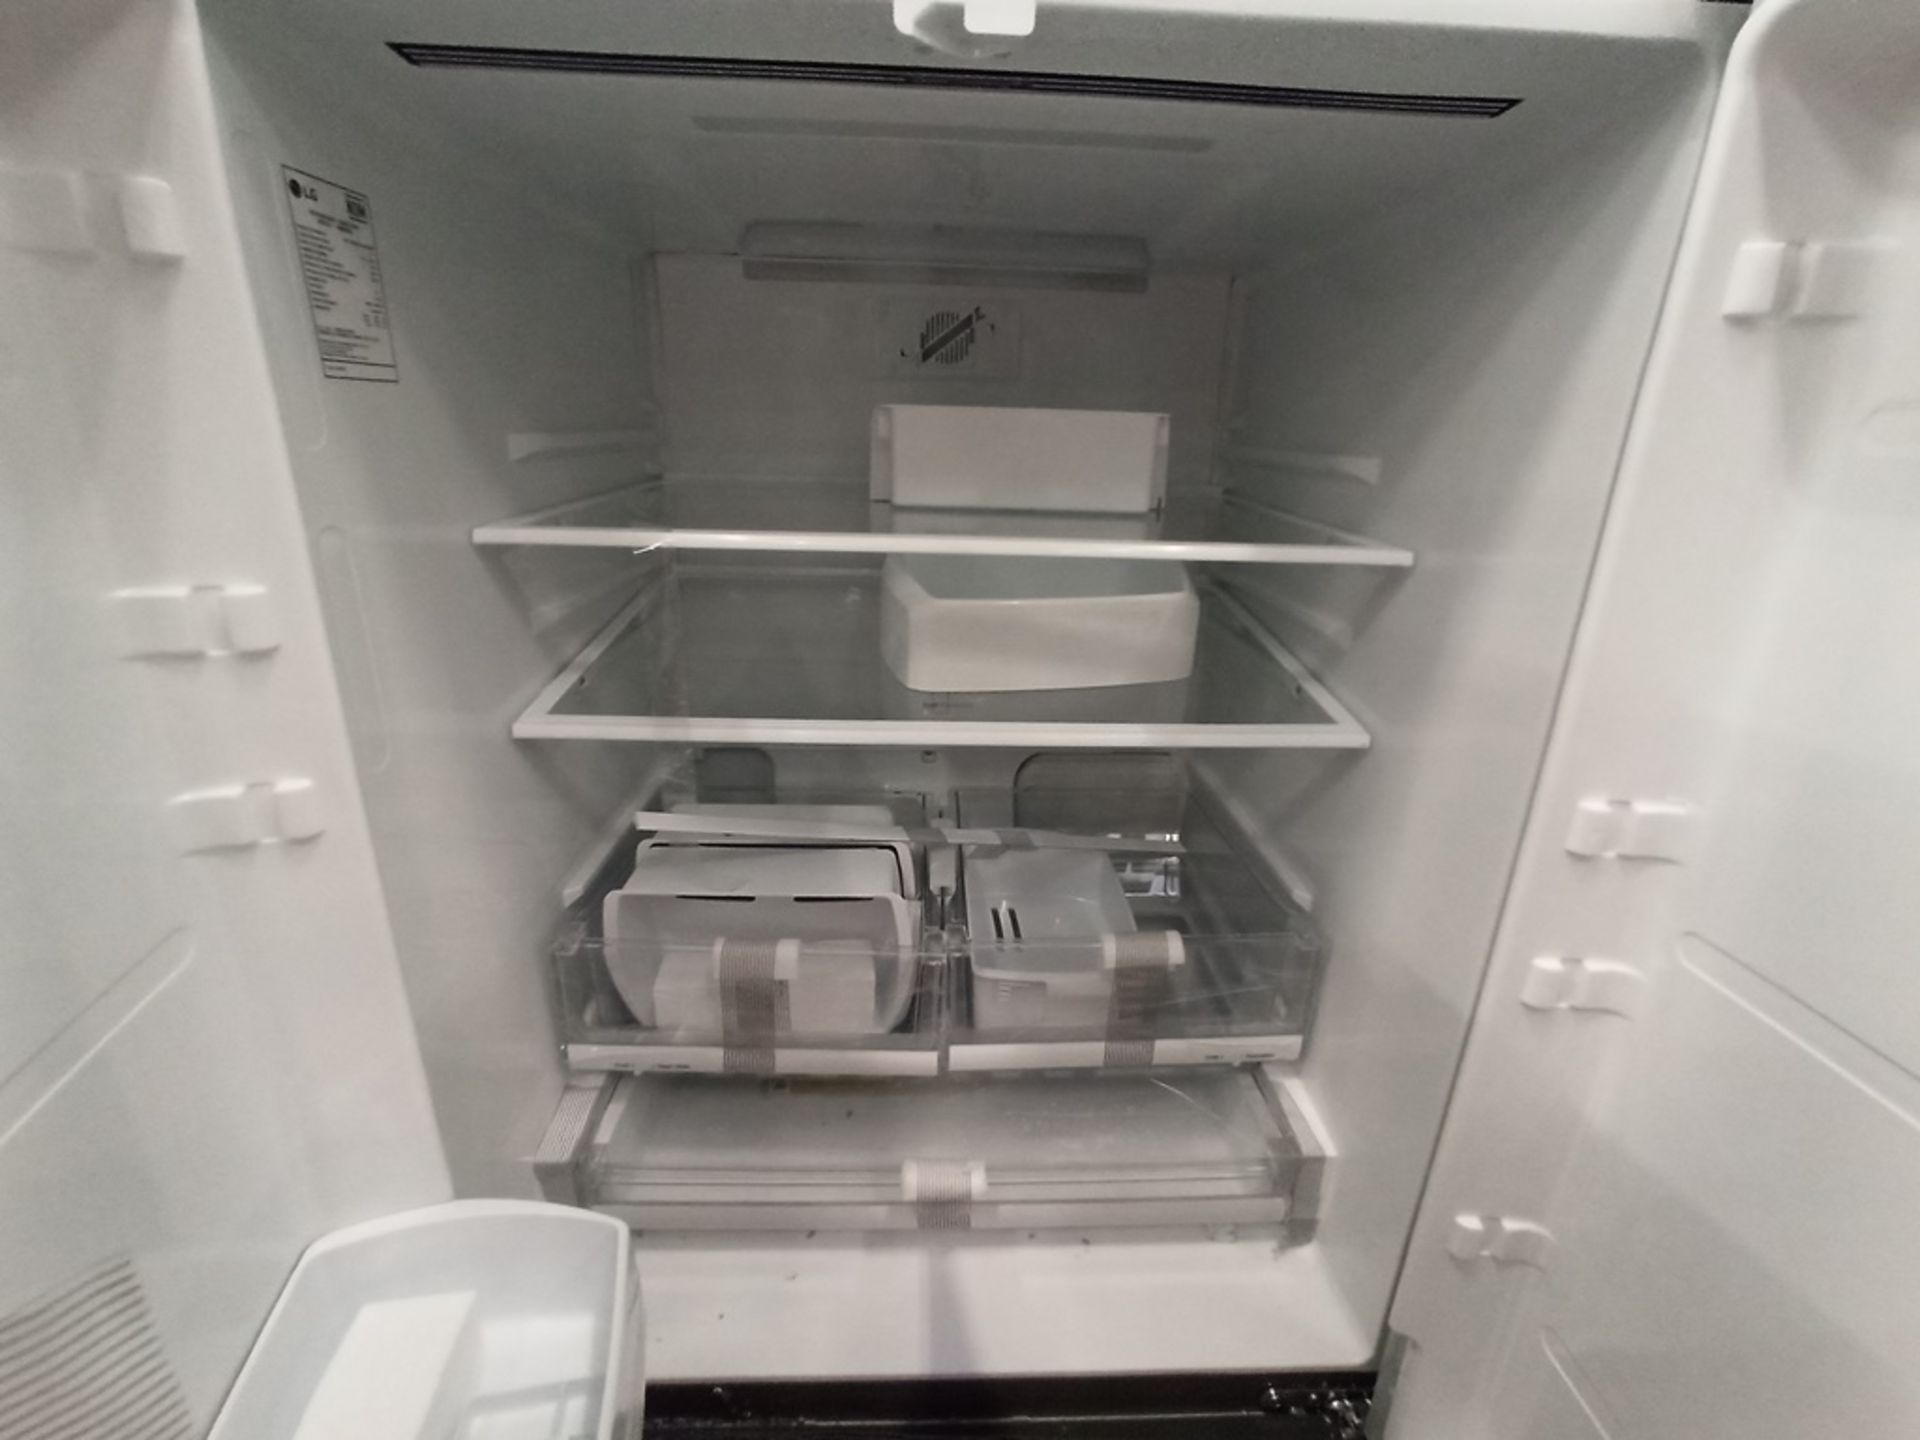 1 Refrigerador Marca LG, Modelo LM65BGSK, Serie A06674, Color GRIS, LB-612024, No se Asegura su fun - Image 7 of 9